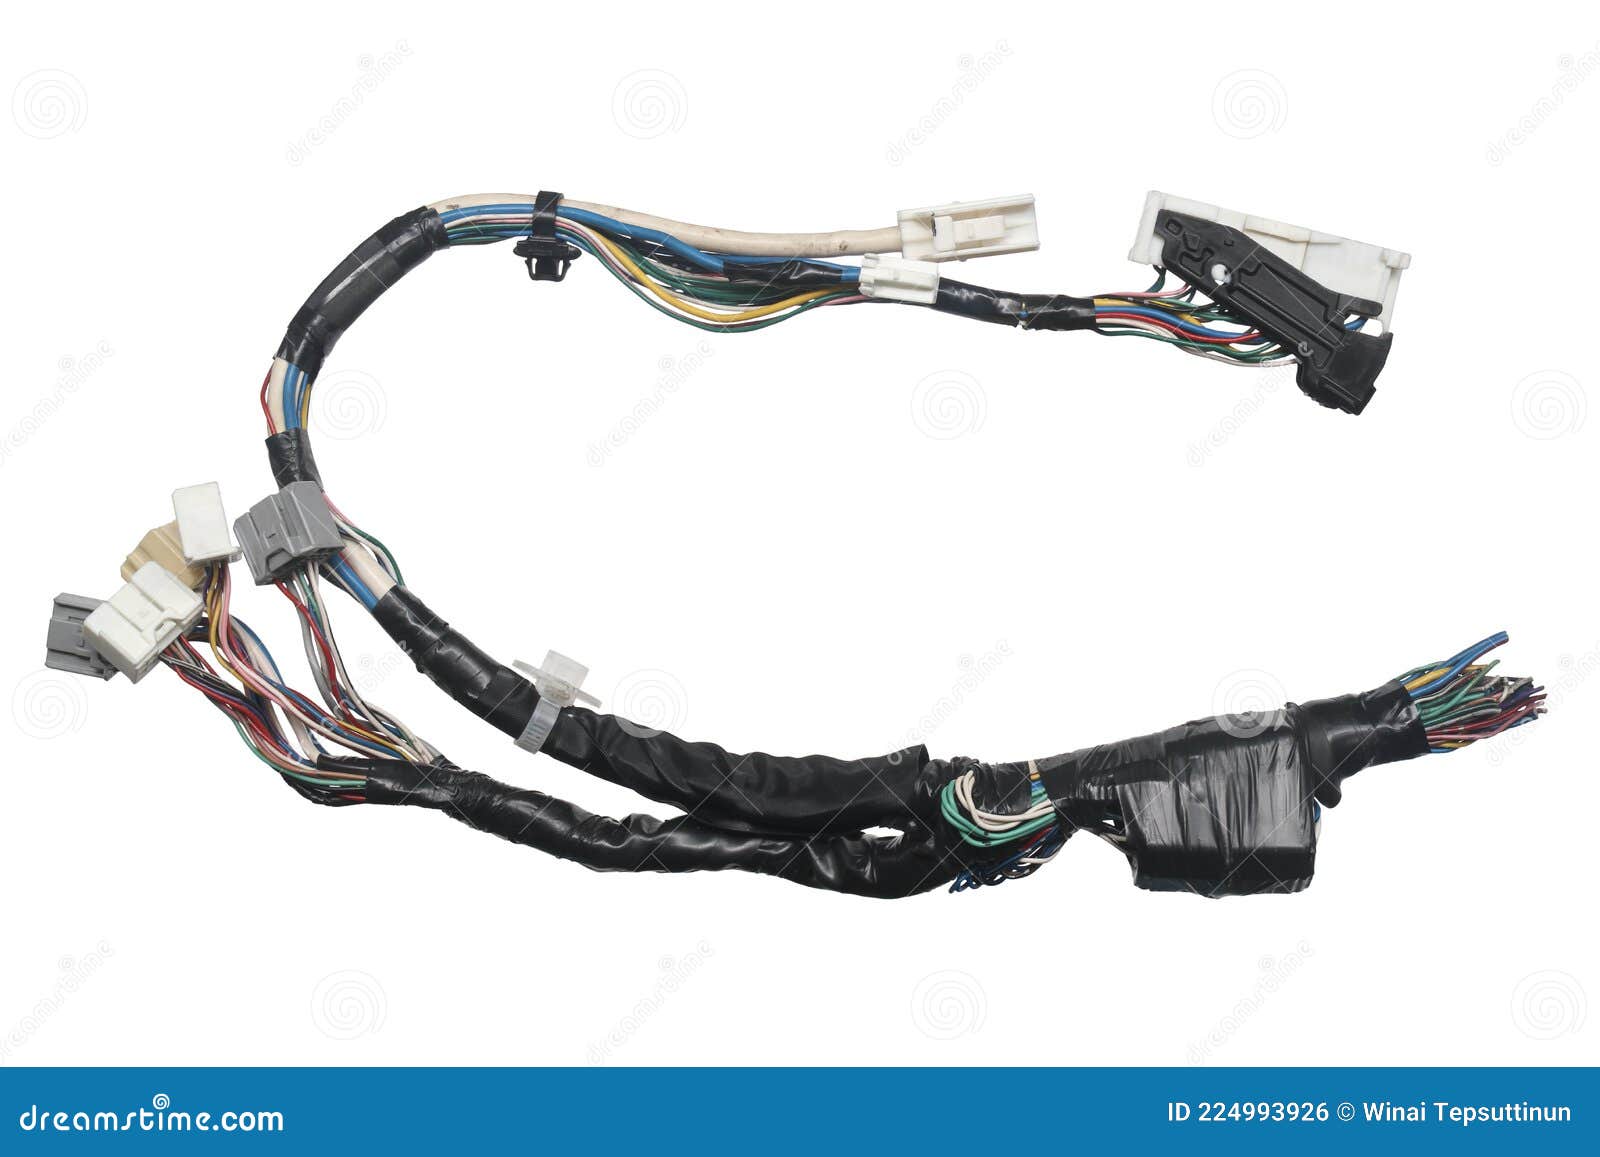 engine wiring harness jumper wire plug